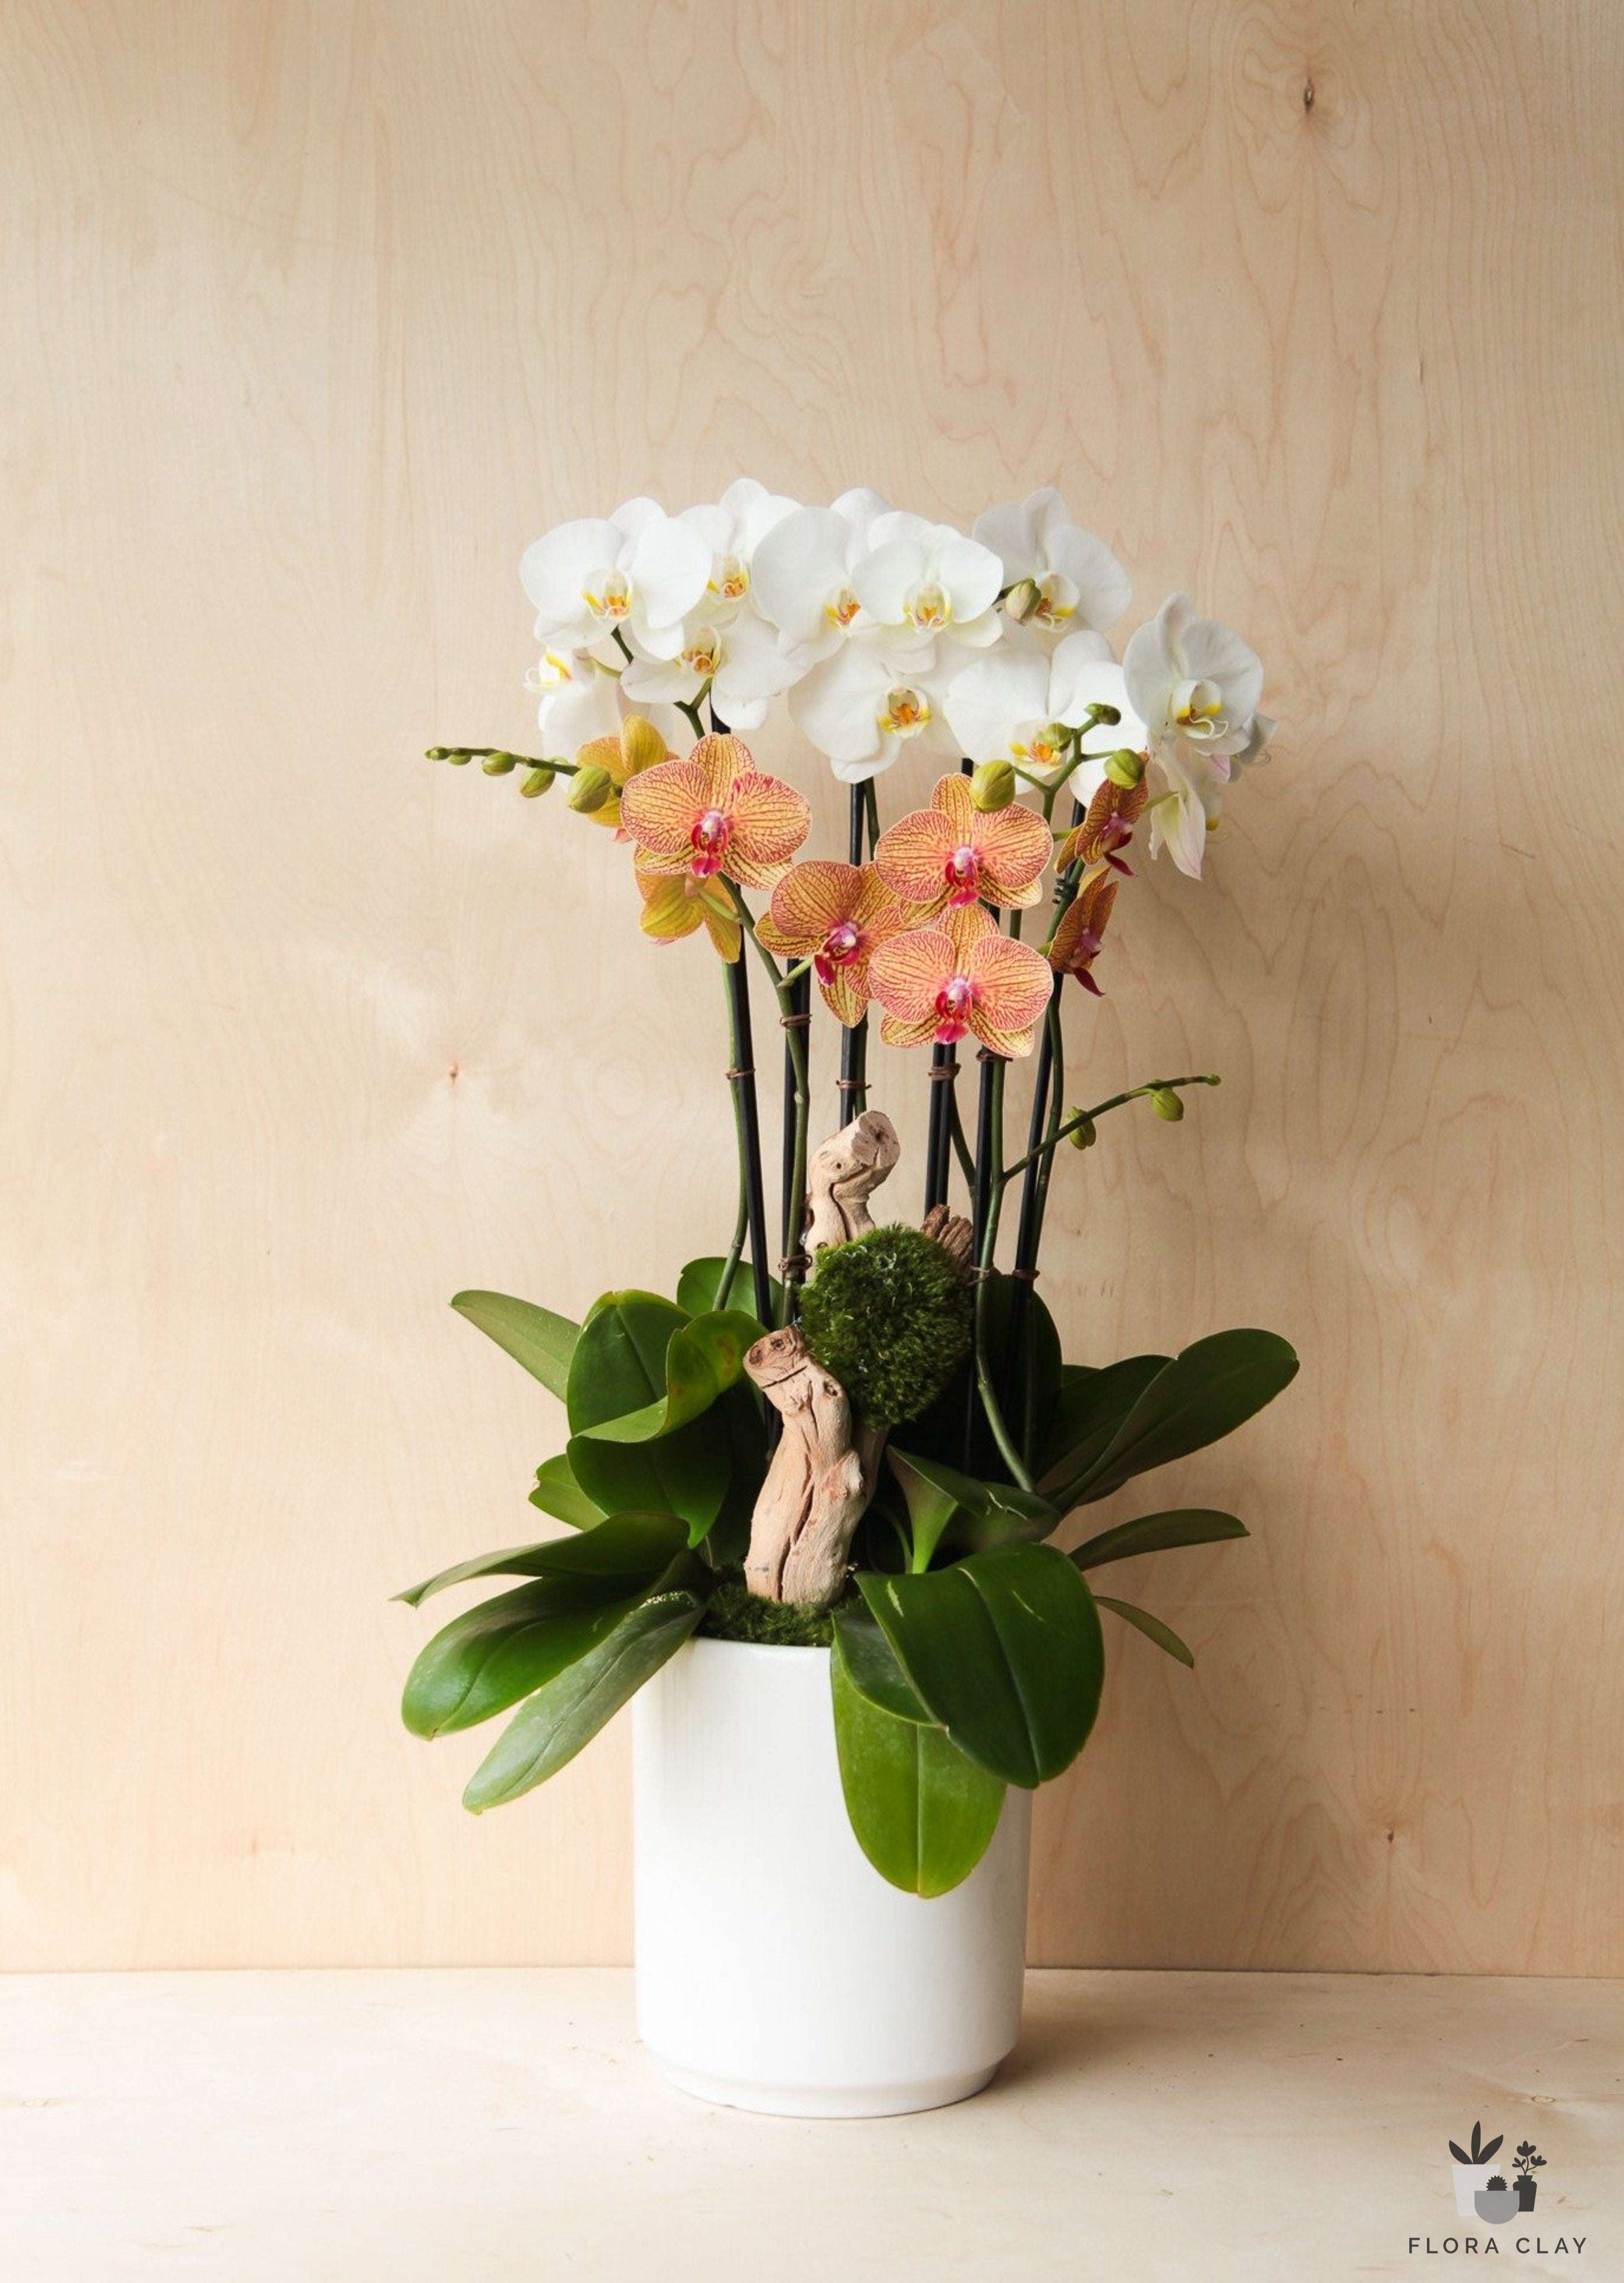 snow-on-flowers-orchid-arrangement-floraclay-1.jpg